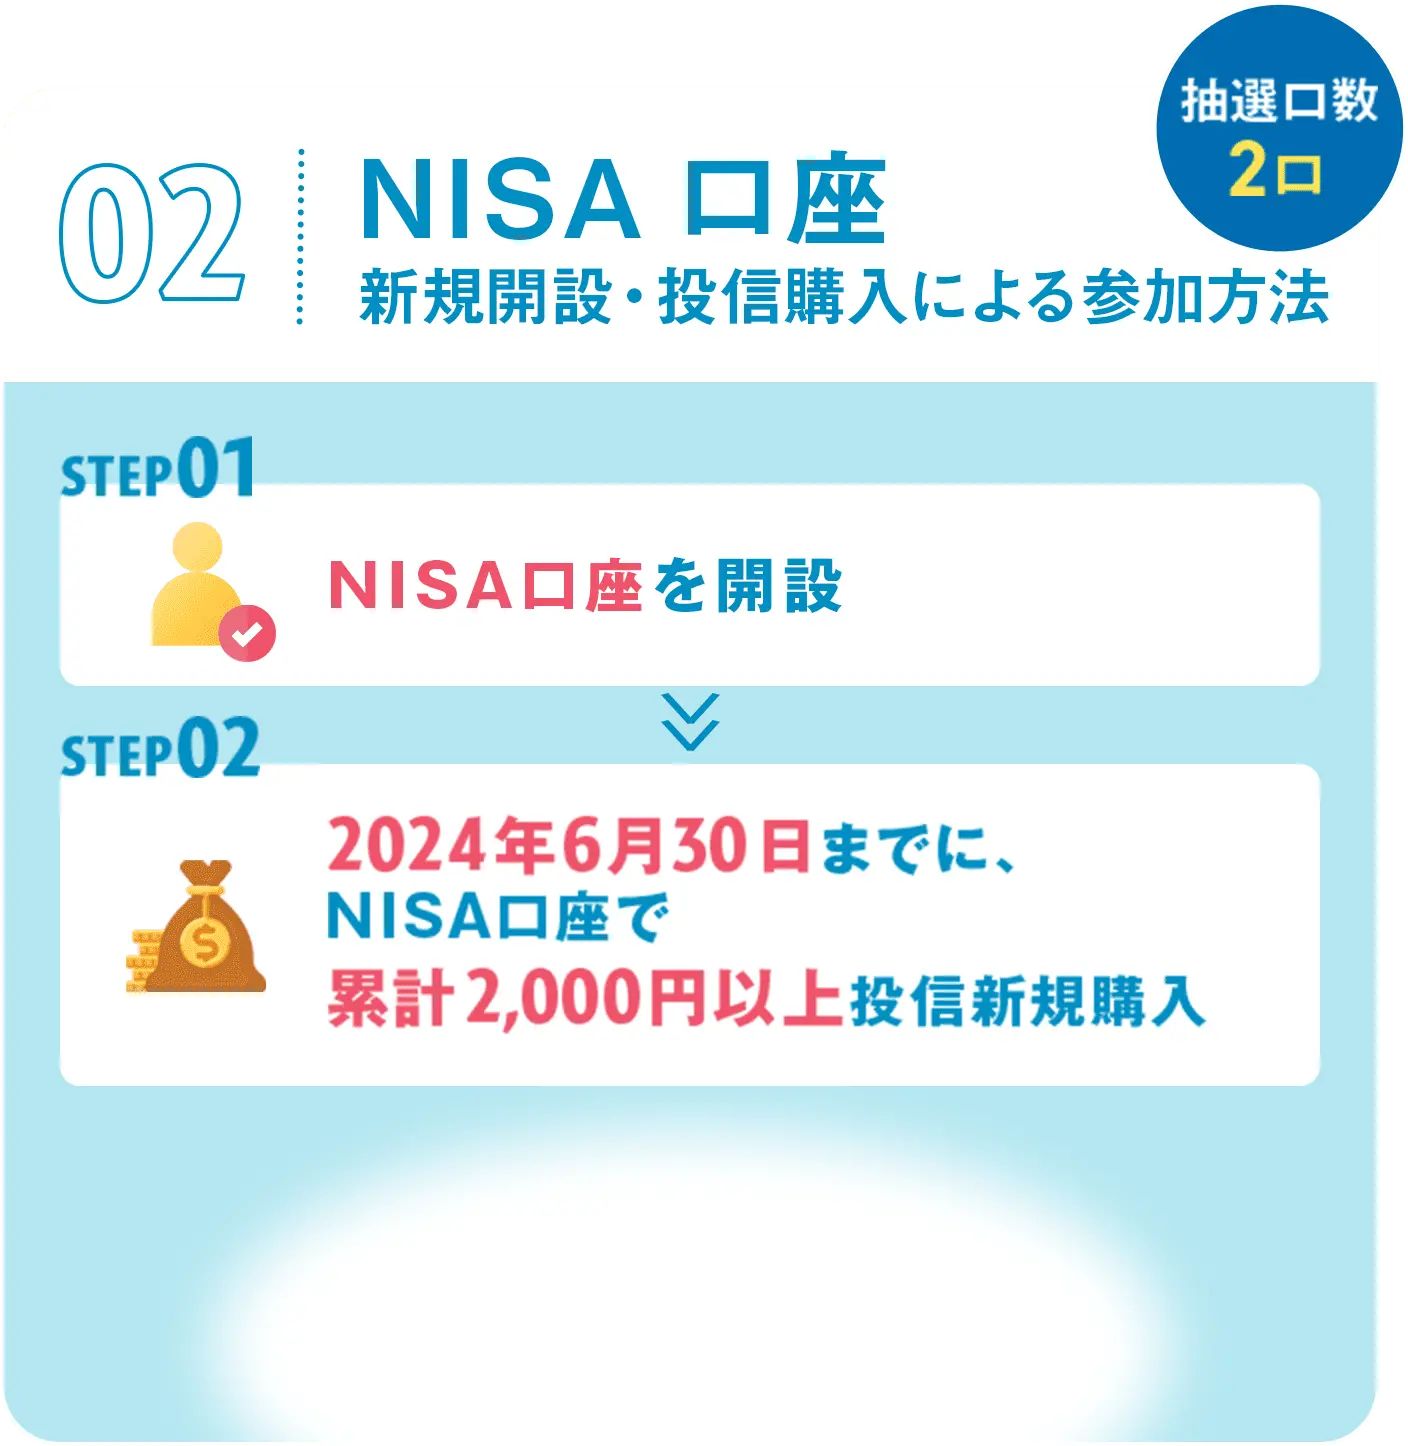 NISA口座新規開設・投信購入による参加方法 STEP1.NISA口座を開設 STEP.2 2024年6月30日までに、NISA口座で累計2000円以上投信新規購入